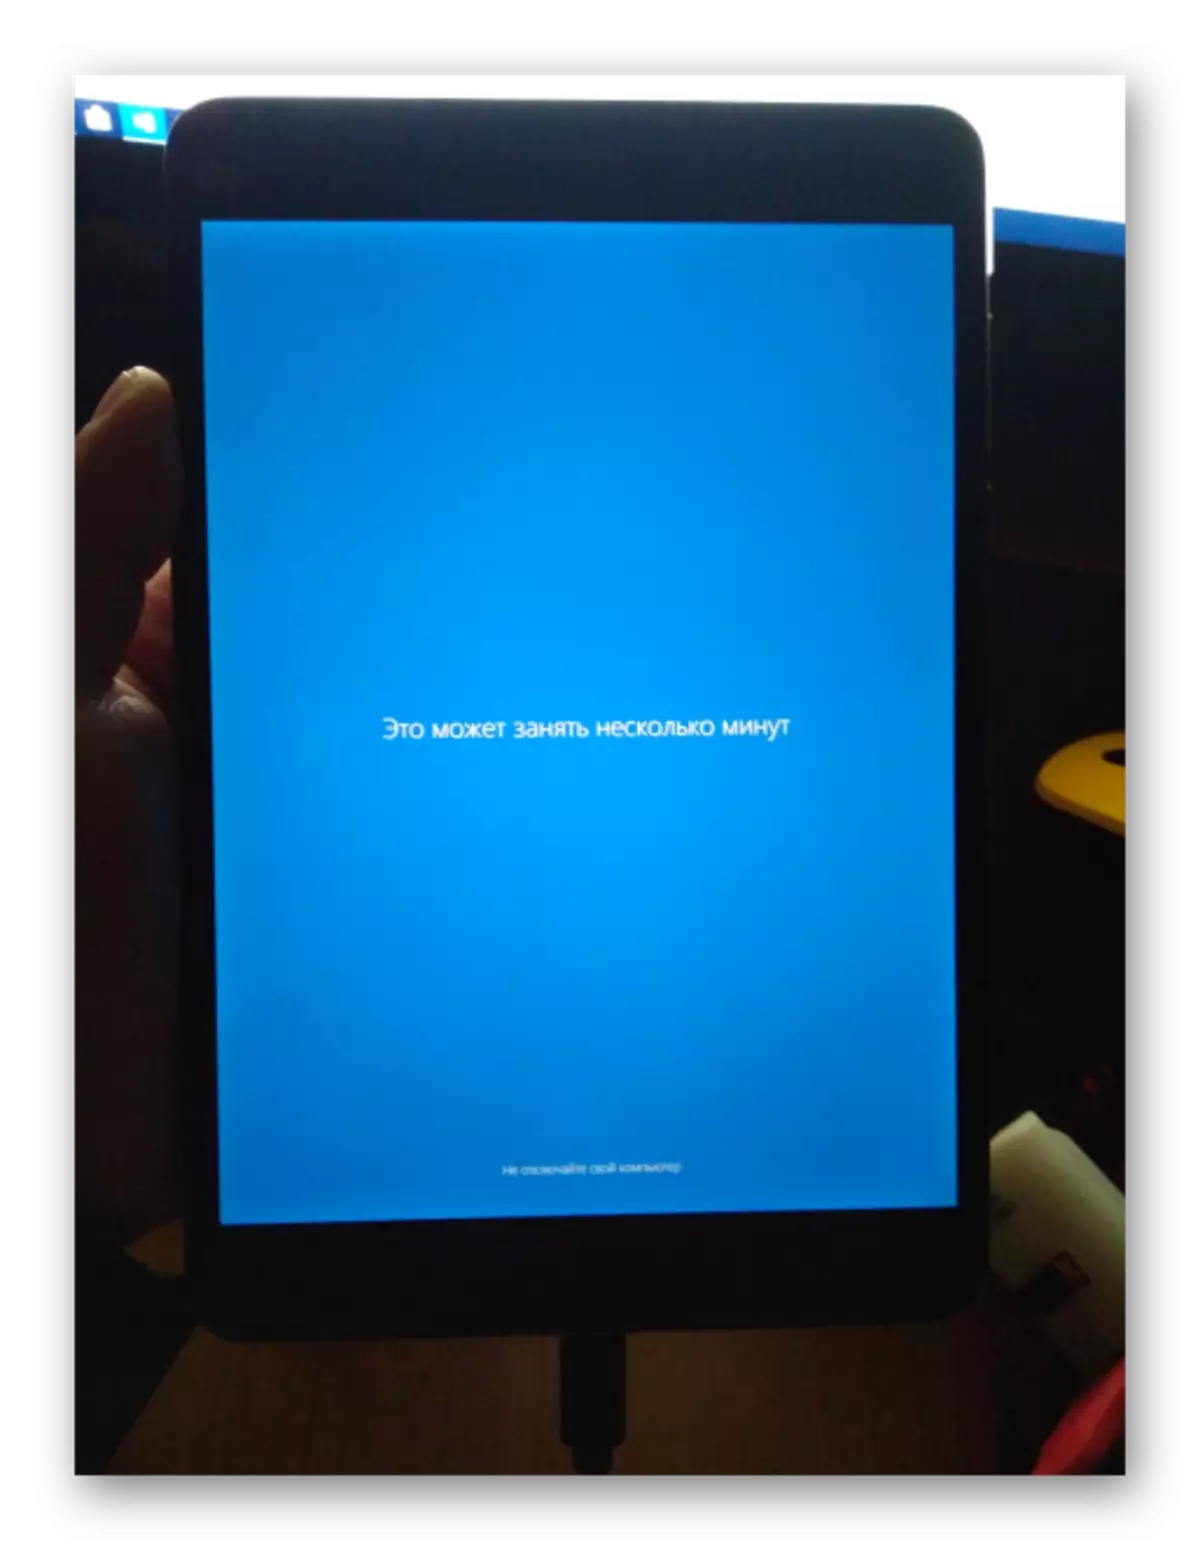 Xiaomi MiPad 2 matha Windows 10 mora tlhomamiso